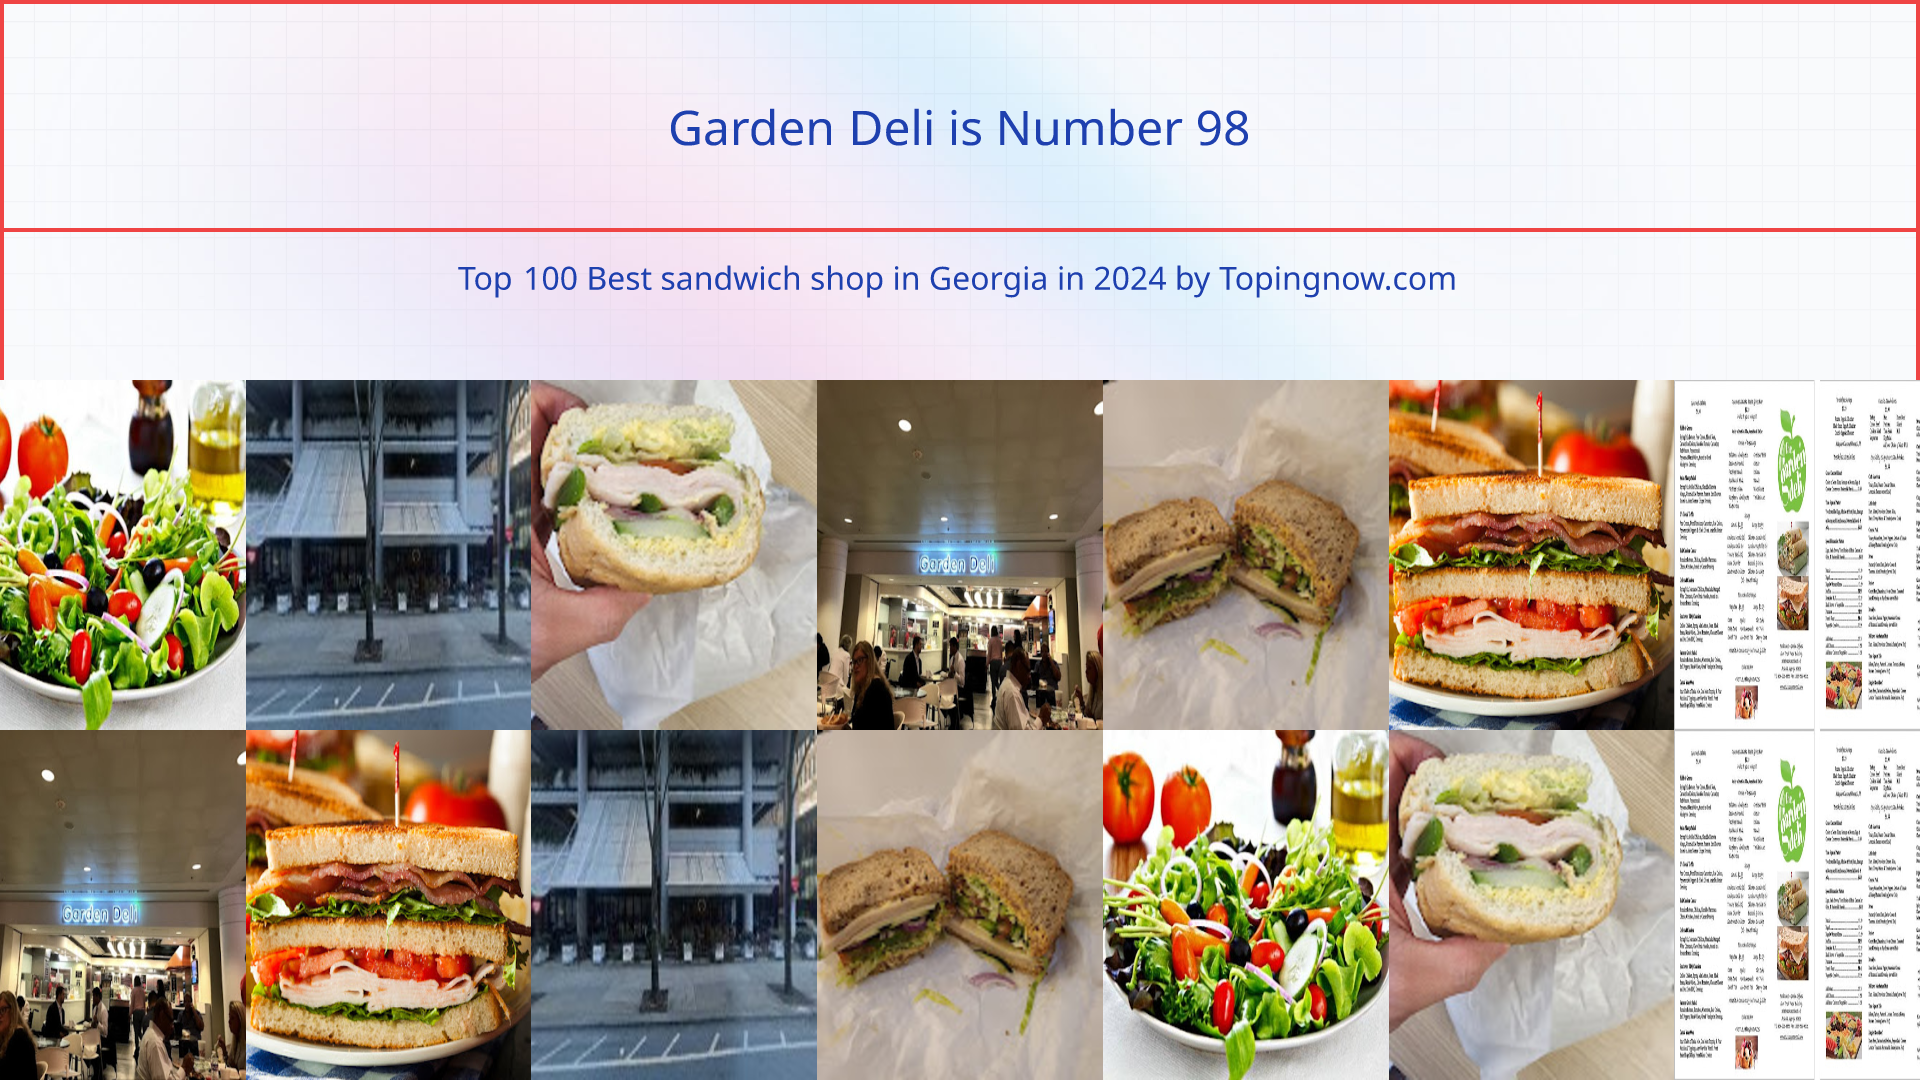 Garden Deli: Top 100 Best sandwich shop in Georgia in 2024